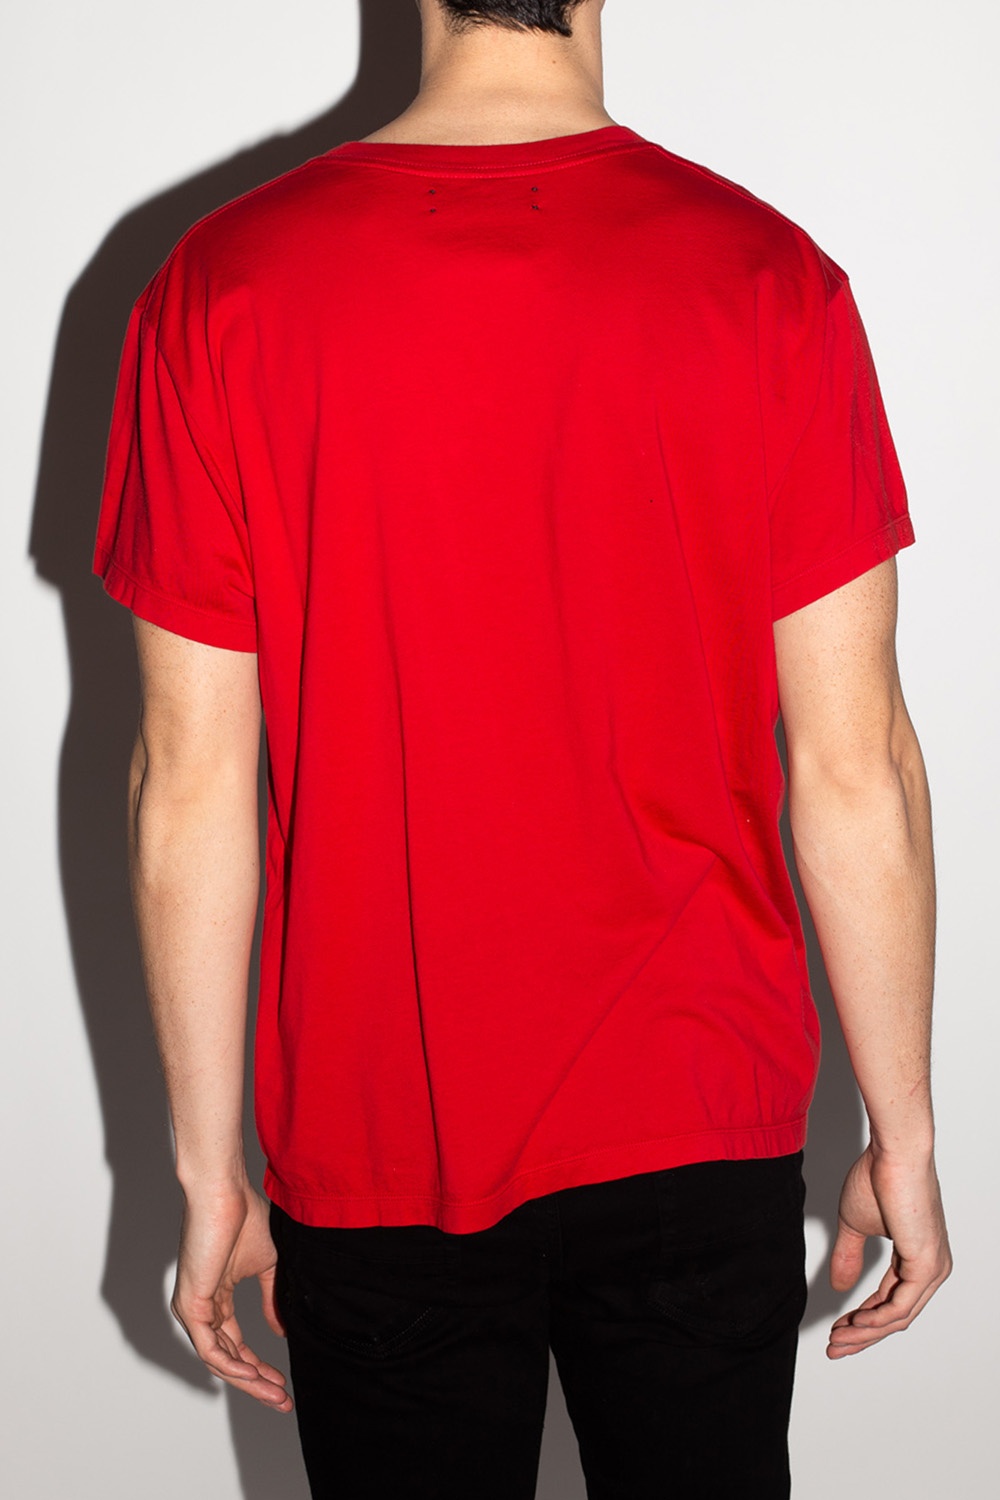 Amiri Crew Neck Short Sleeve T-Shirt - Red T-Shirts, Clothing - AMIRI40758